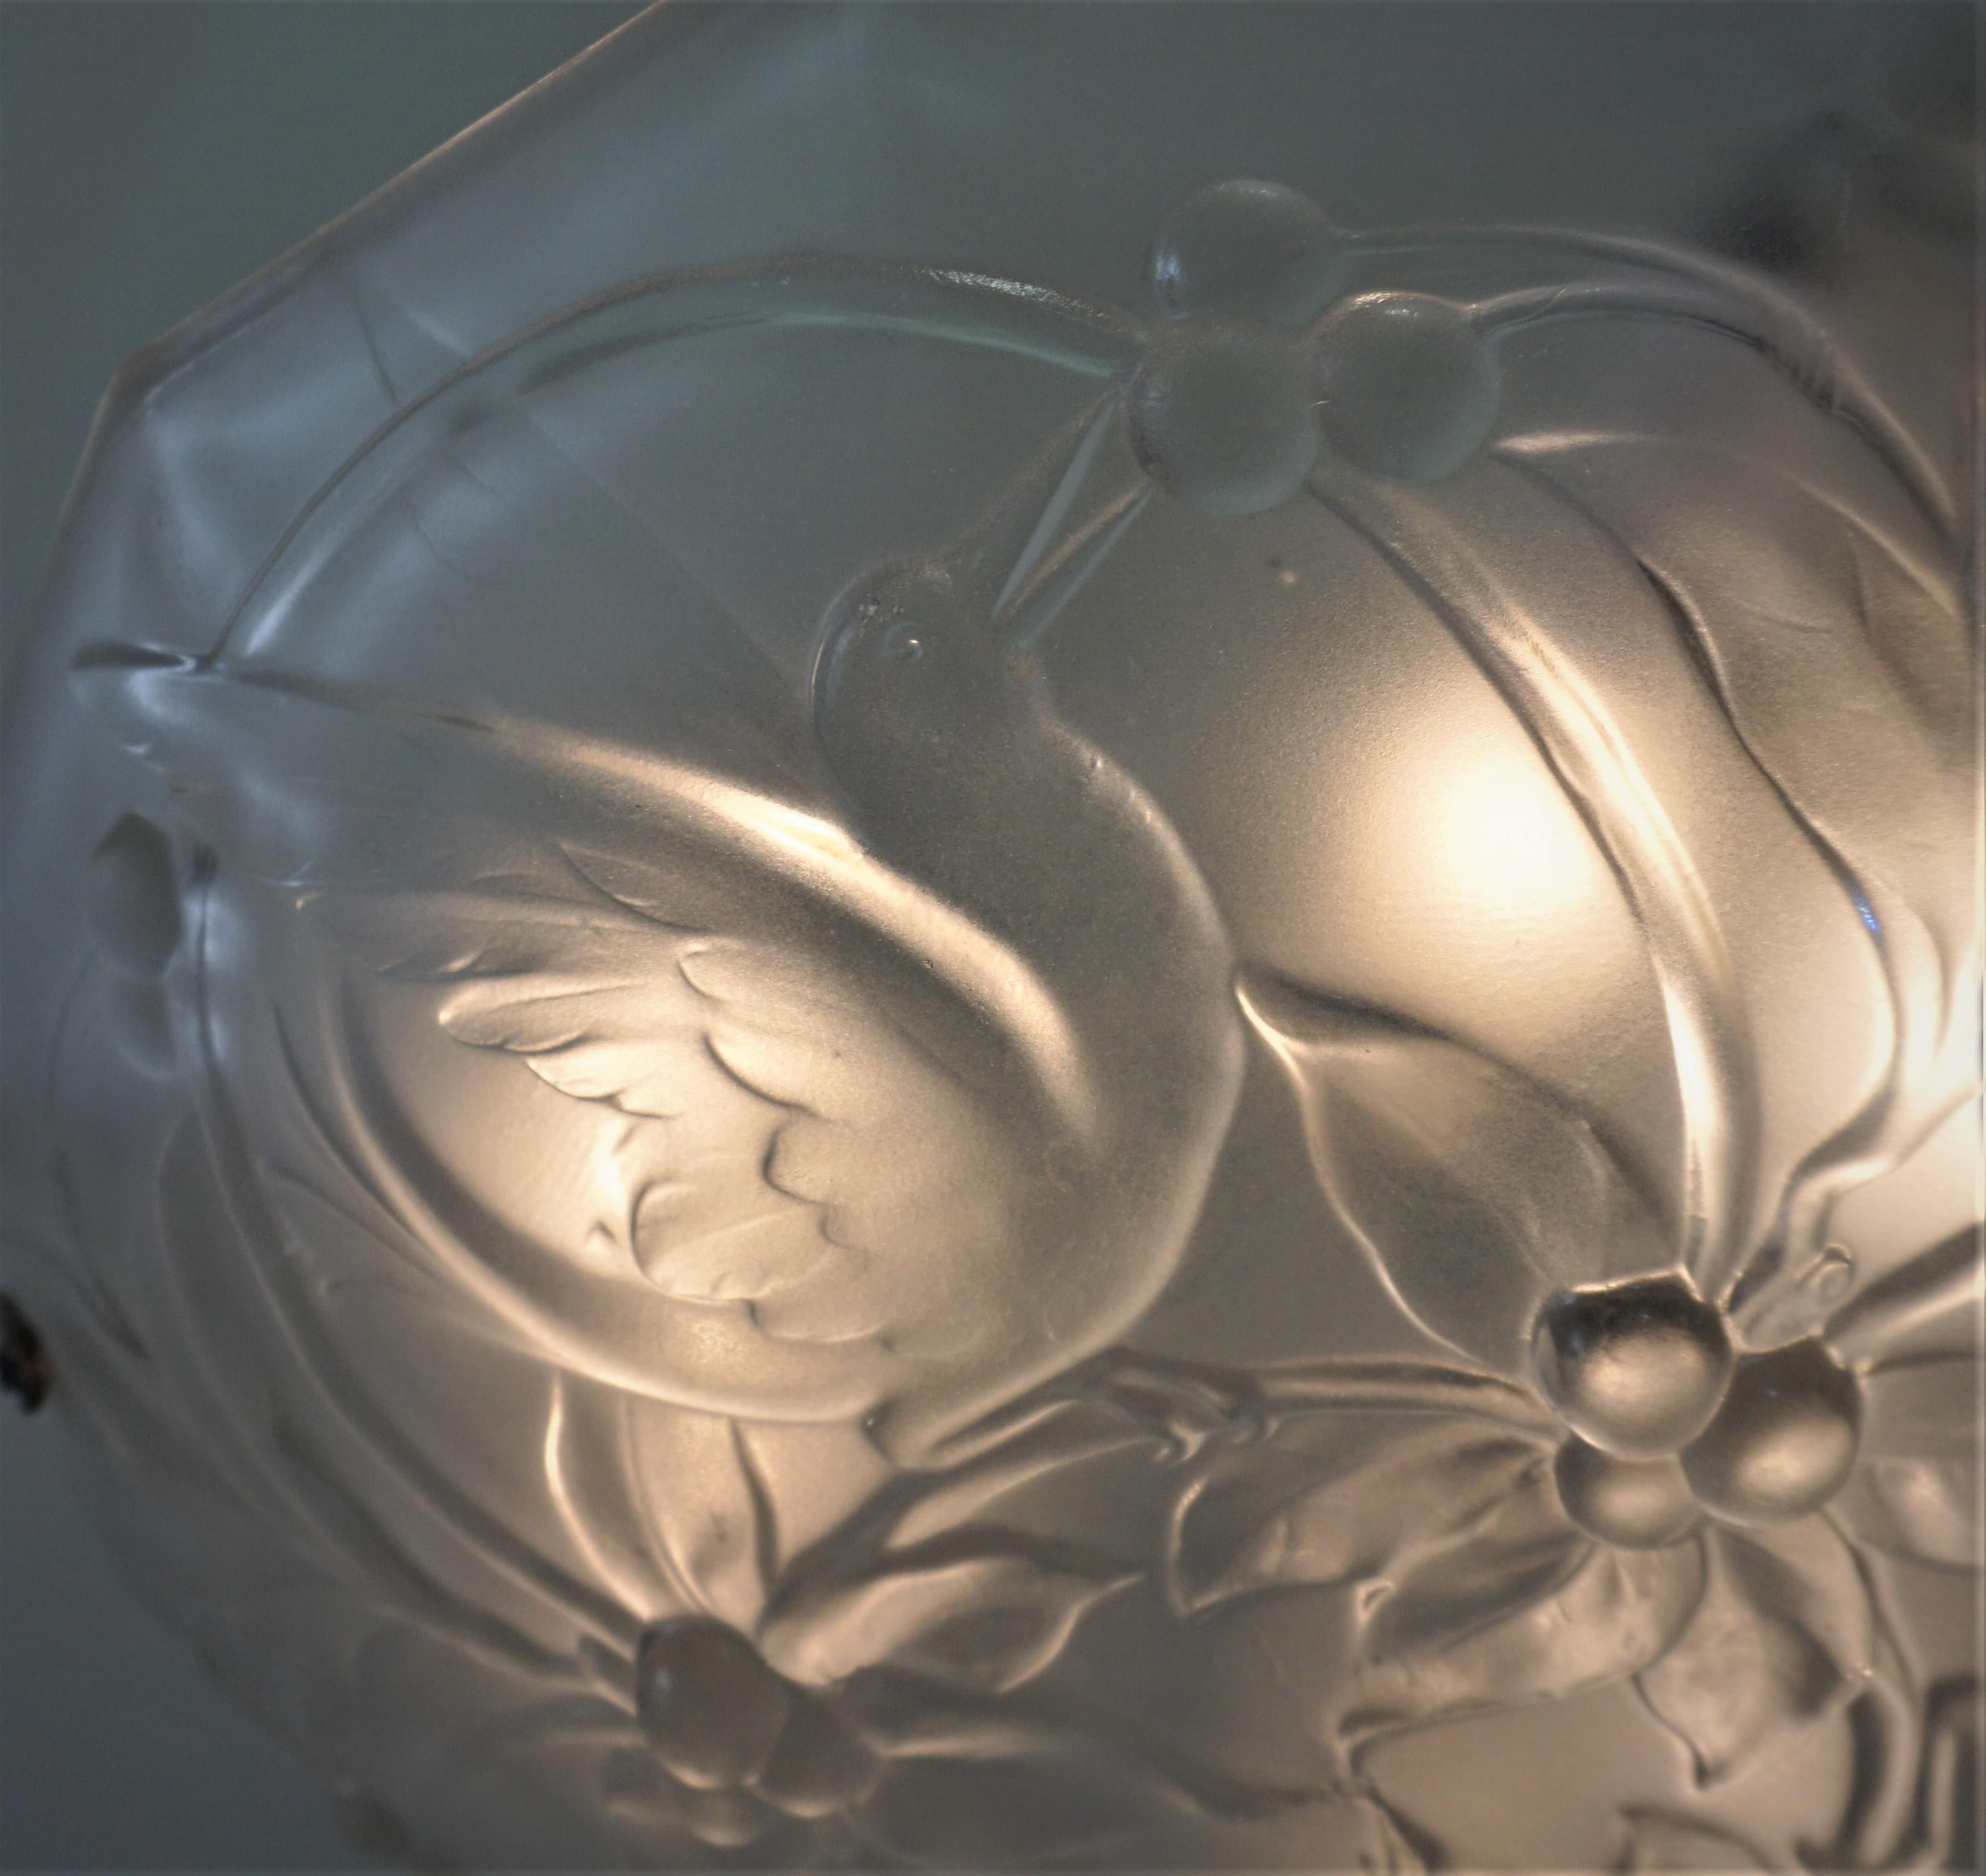 Clear frost glass with birds eating cherries art deco chandelier with nickel on bronze hardware.
Six lights max 60 watt each.